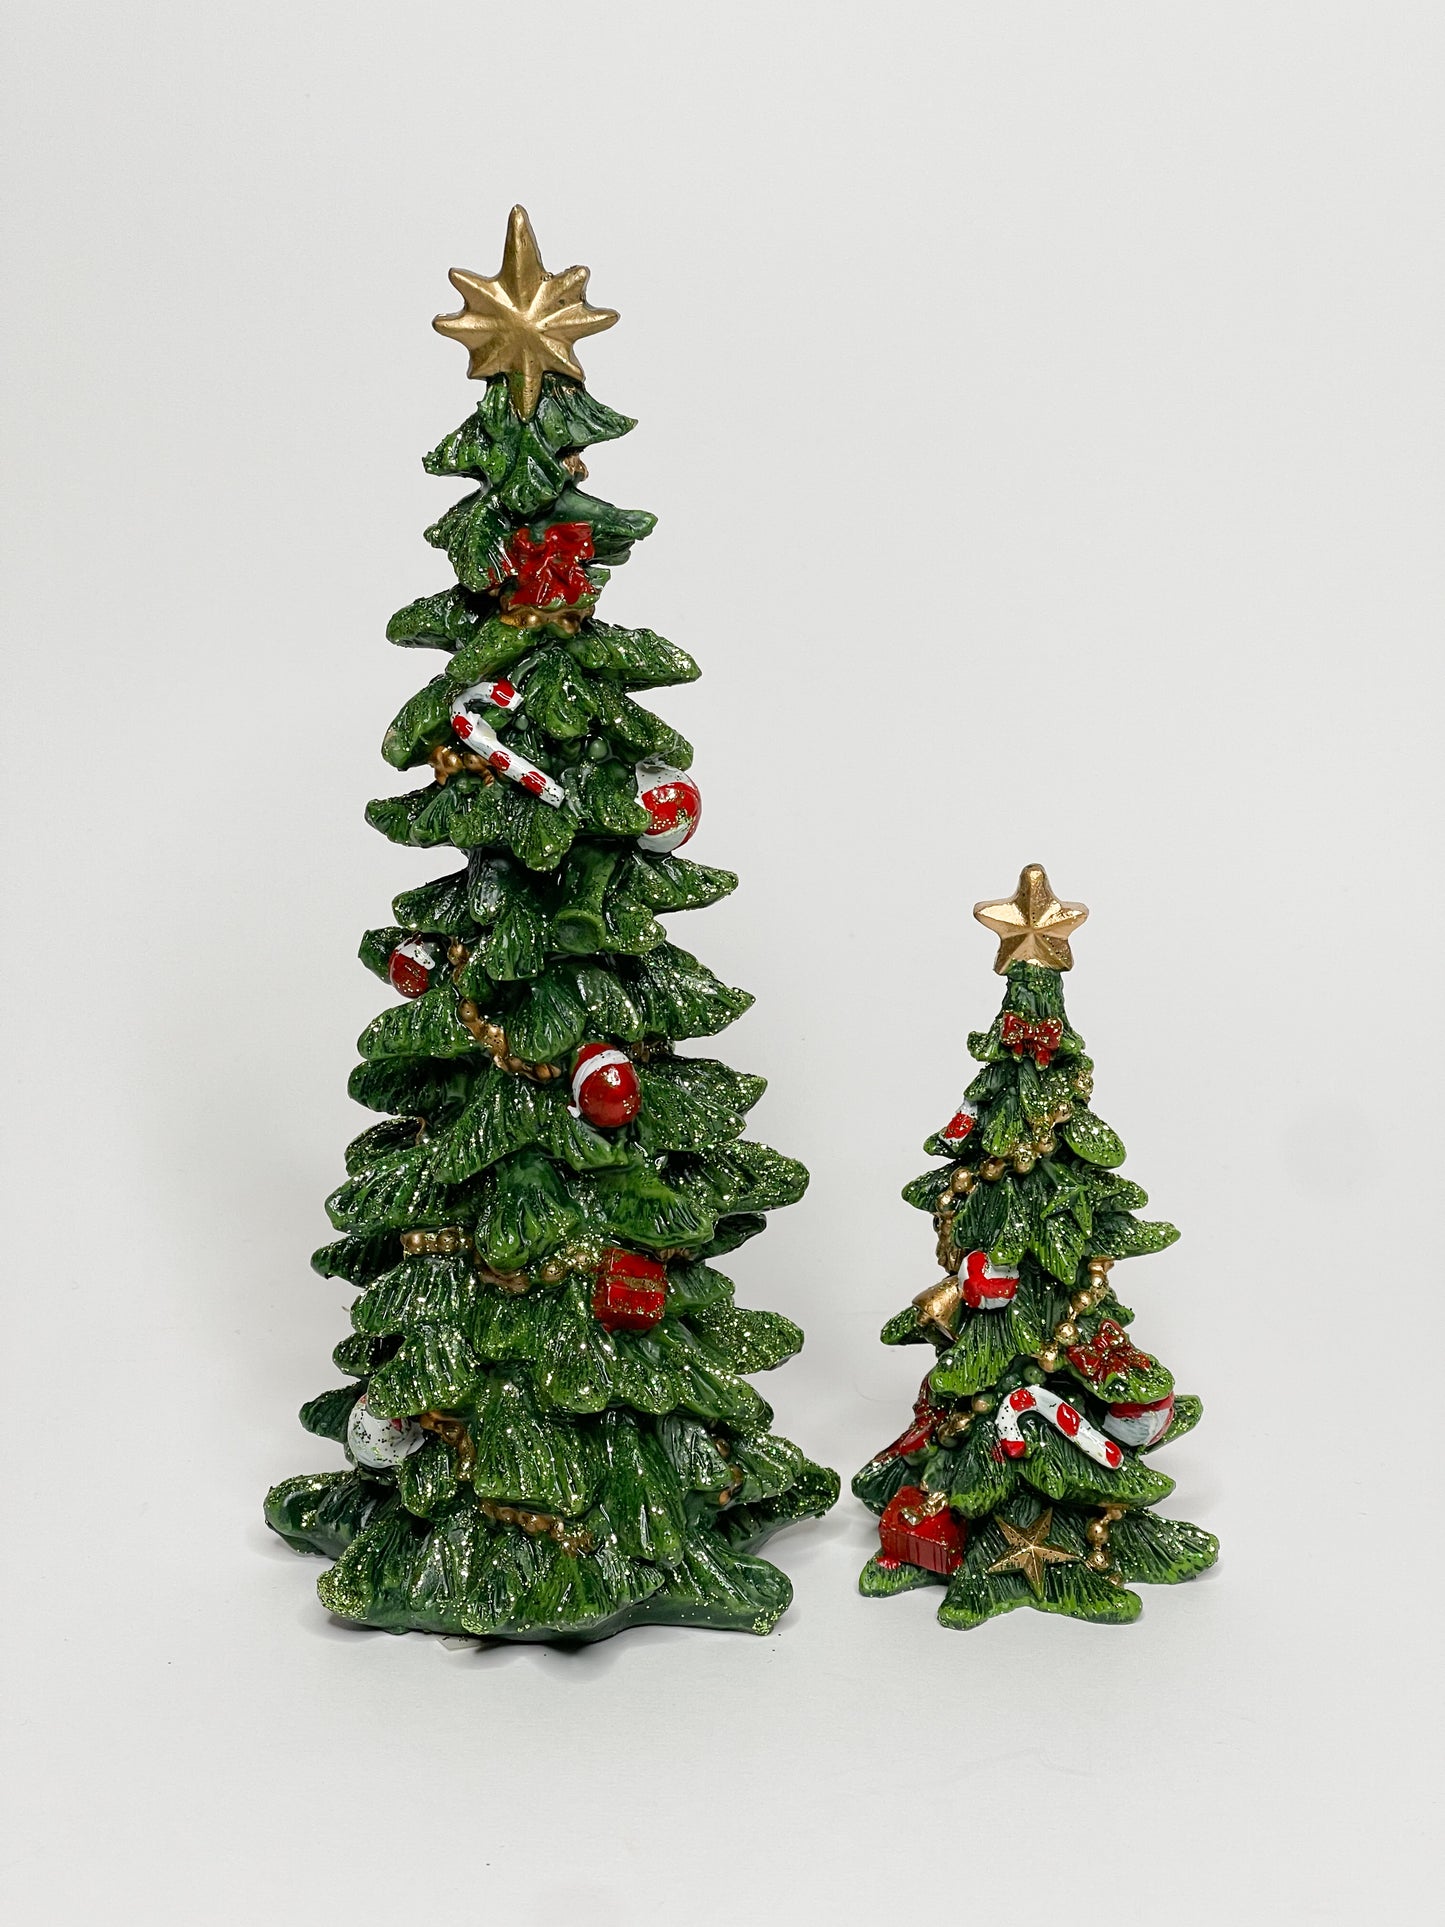 Christmas decoration "Christmas tree" 20cm.